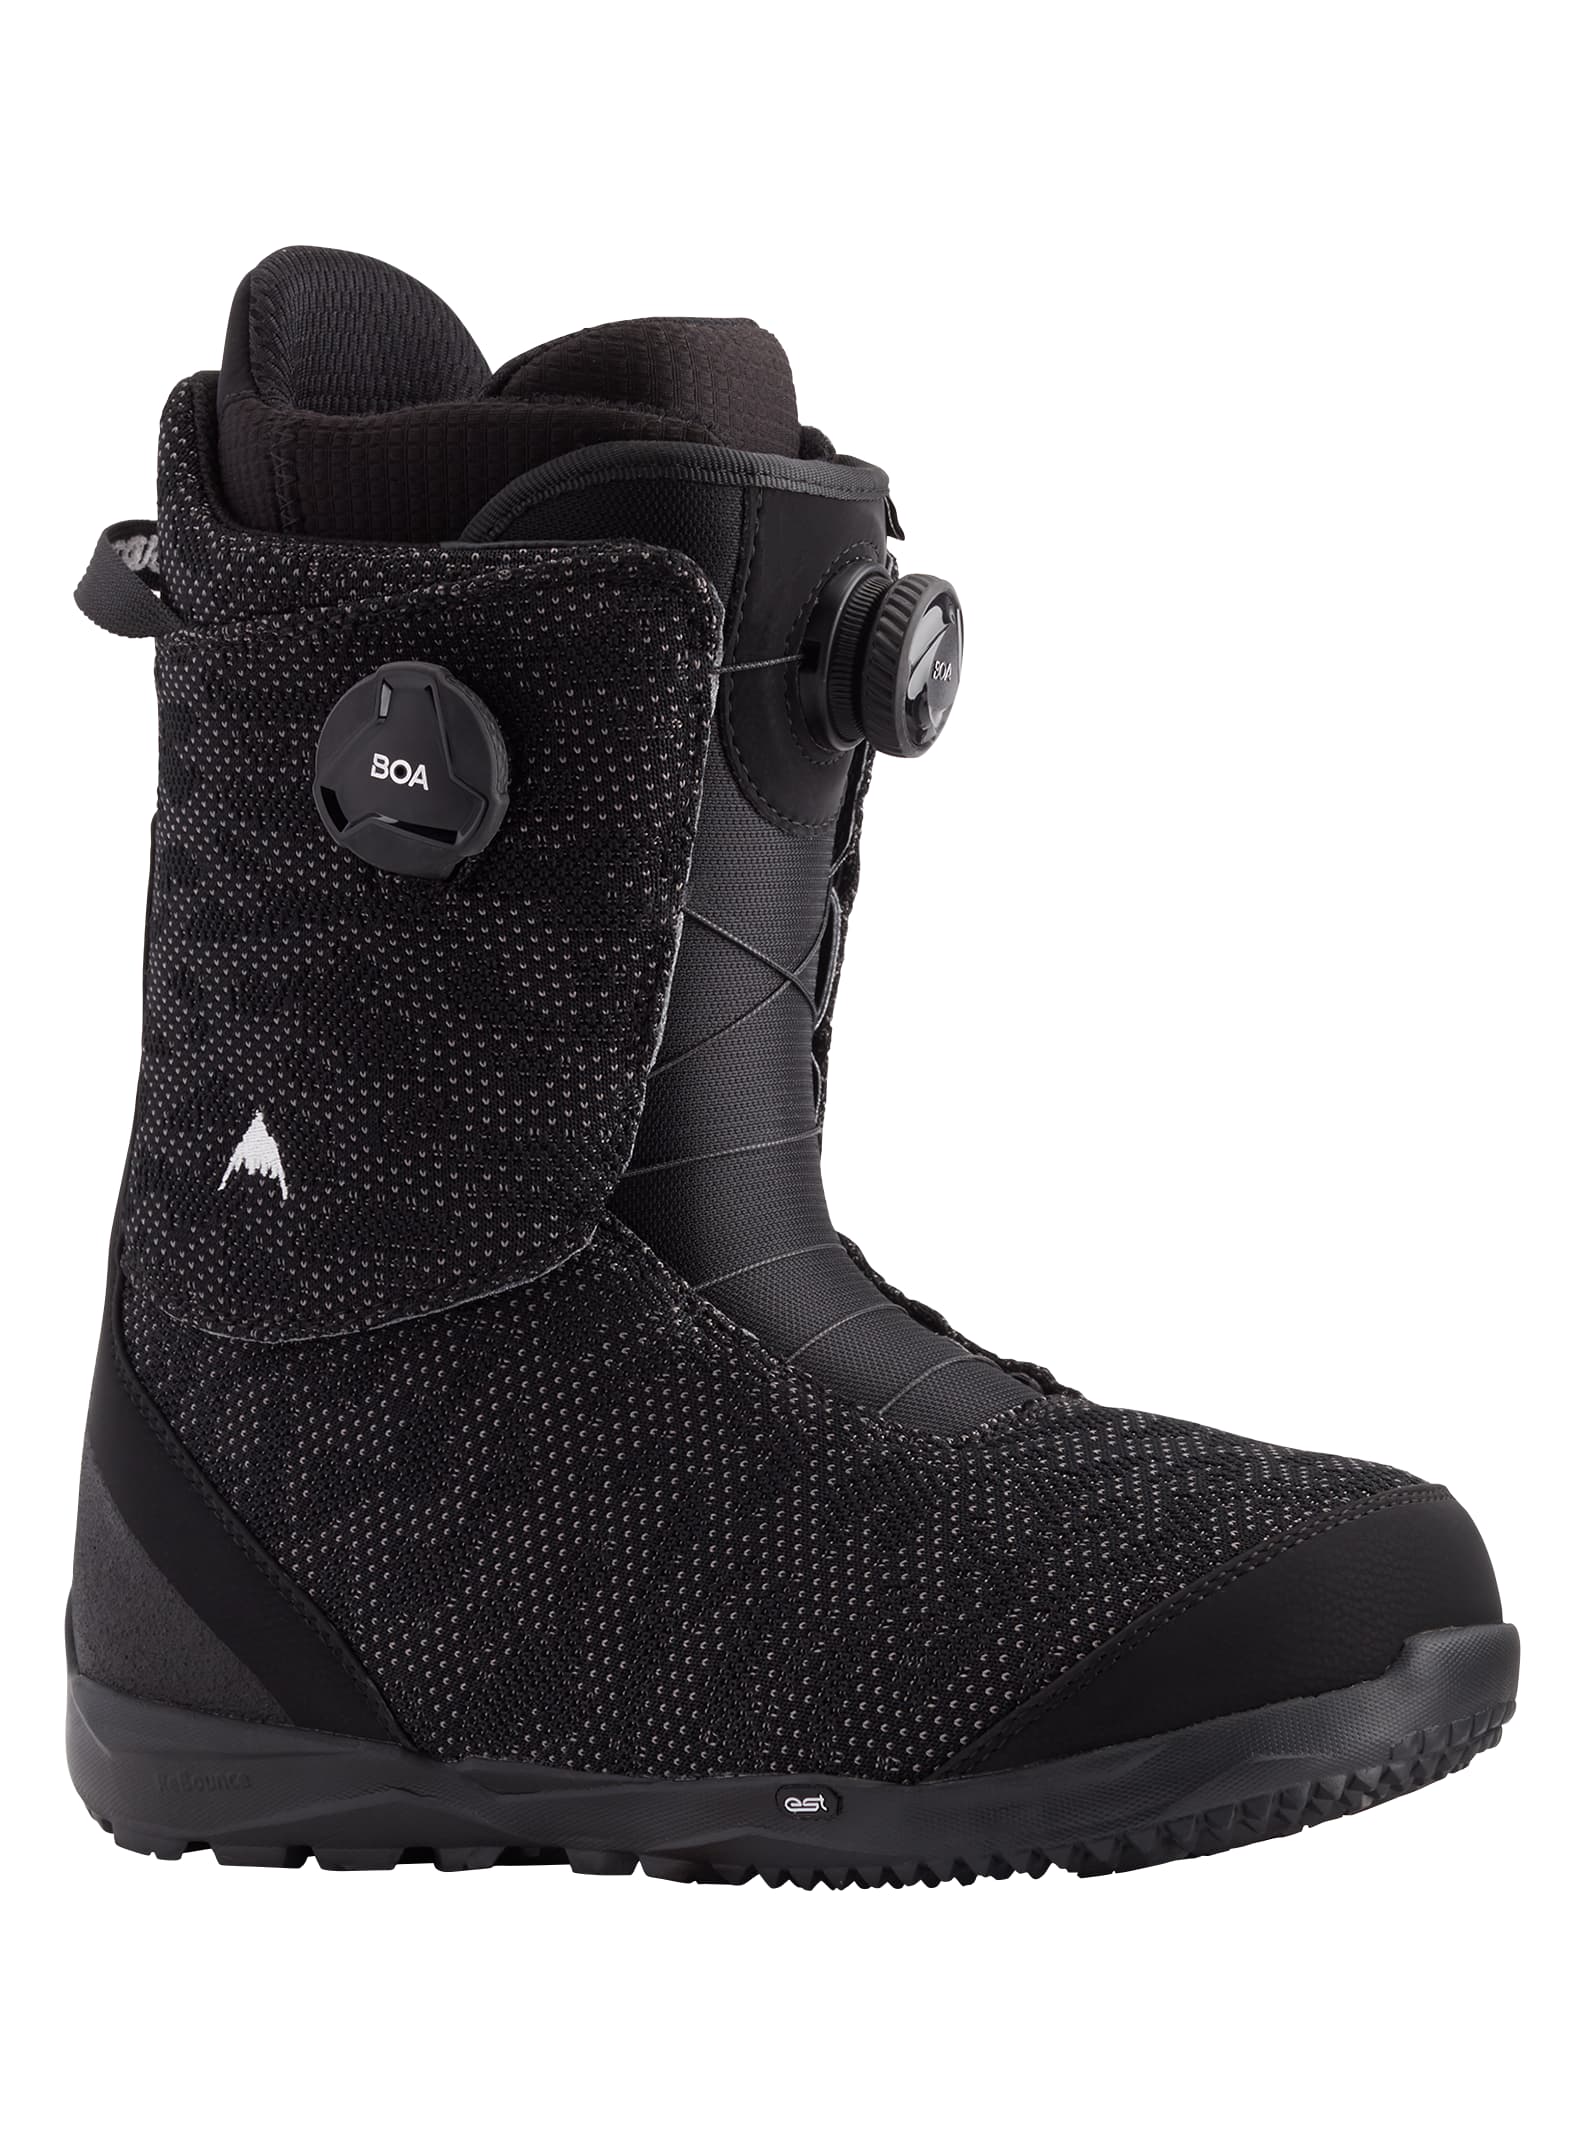 Burton - Boots de snowboard Swath BOA® homme, Black, 9.0